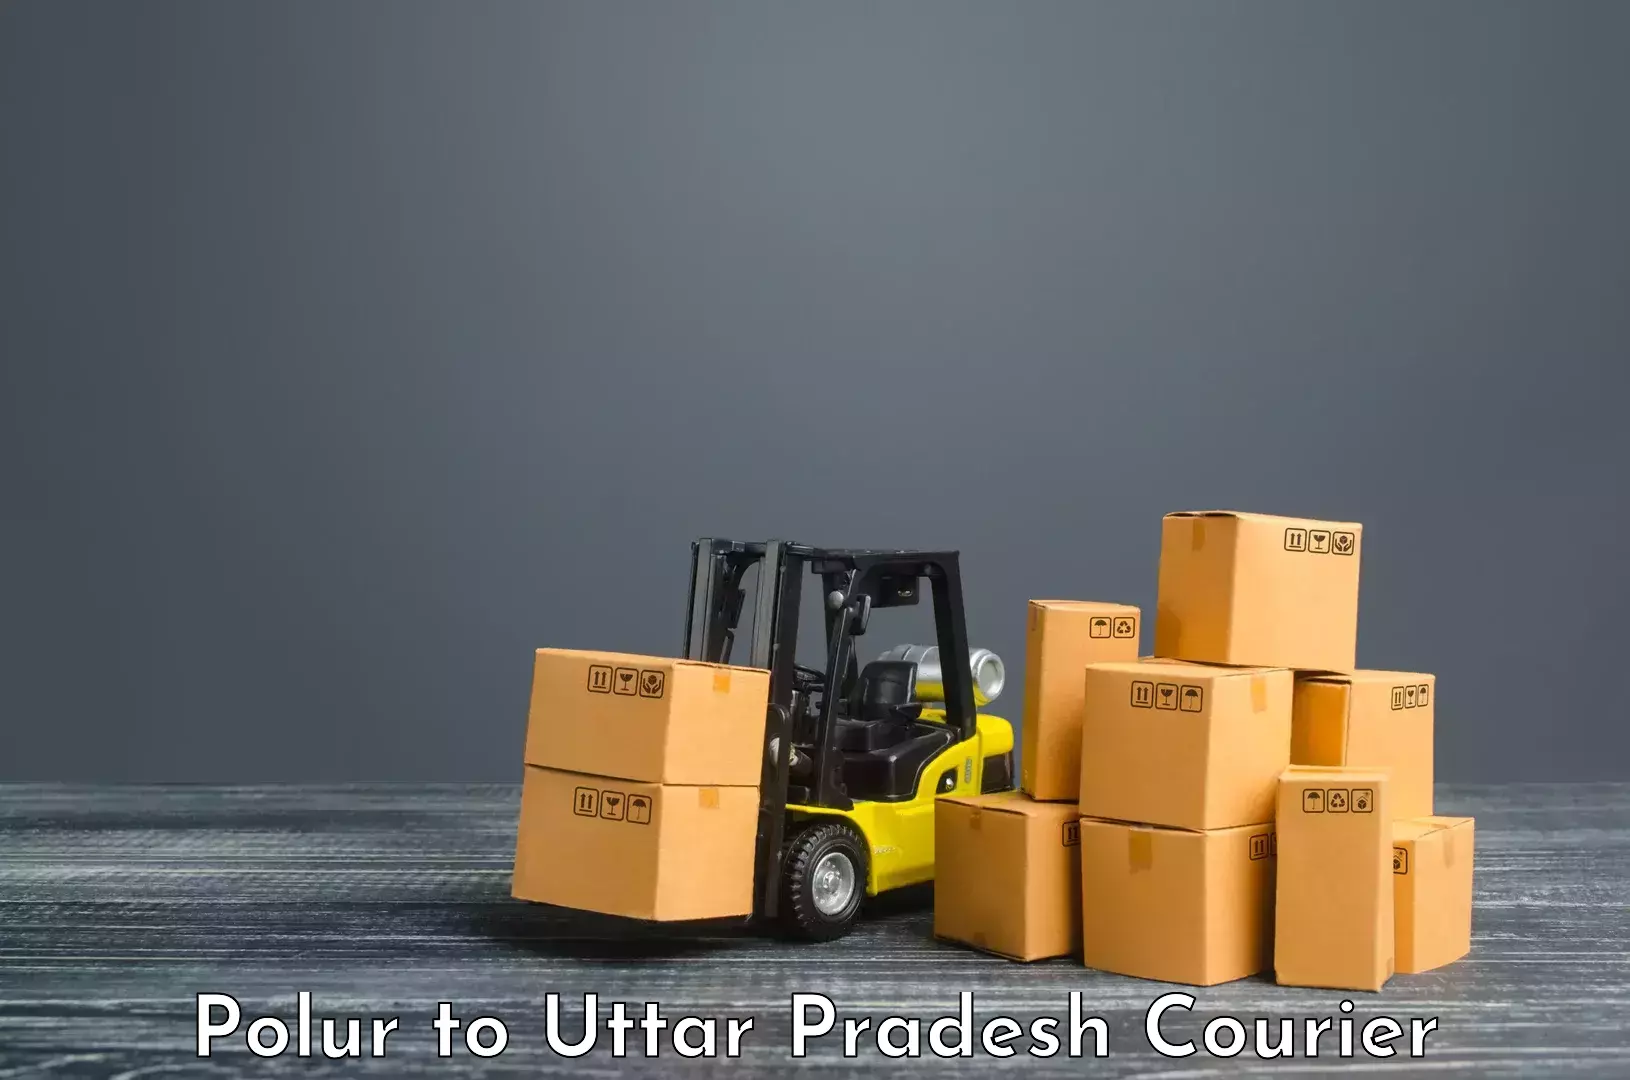 Advanced tracking systems Polur to Uttar Pradesh